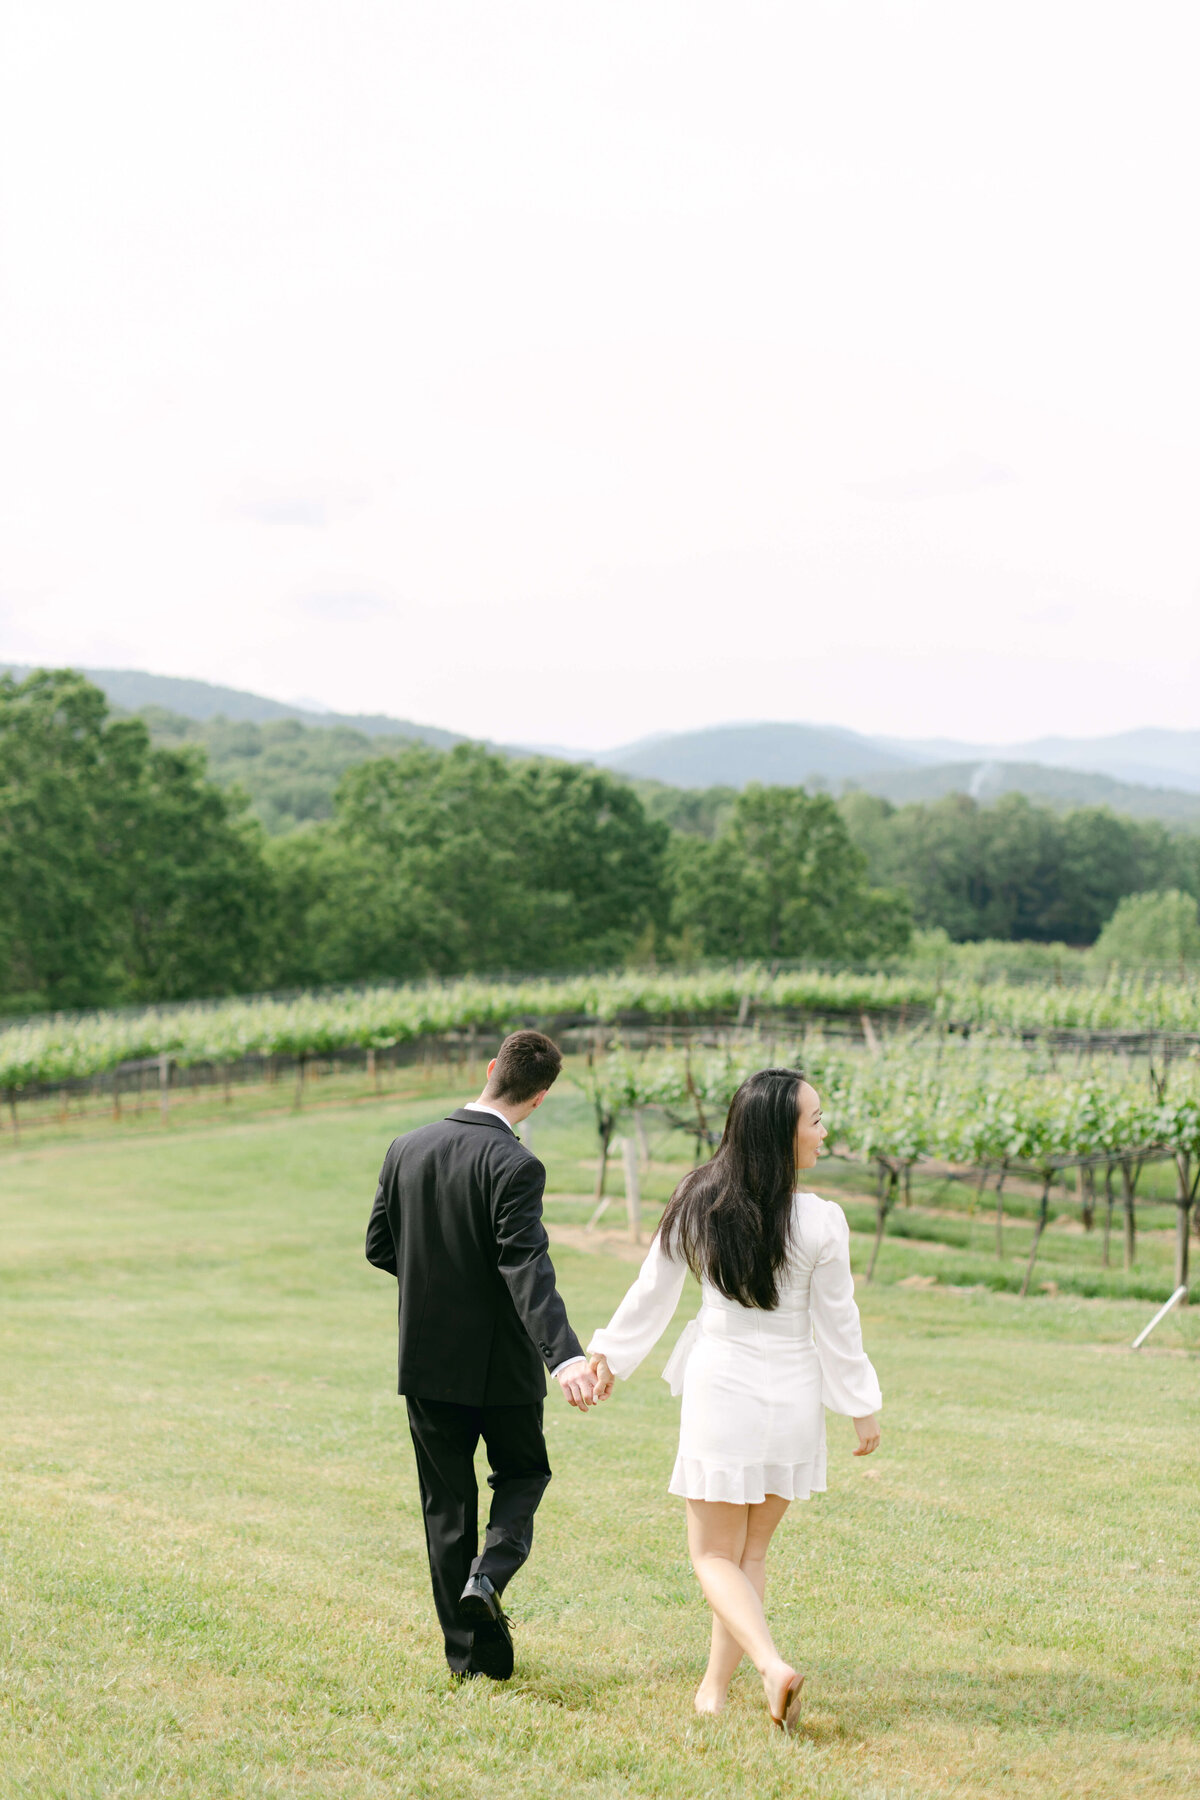 A bride and groom walk casually through a vineyard.